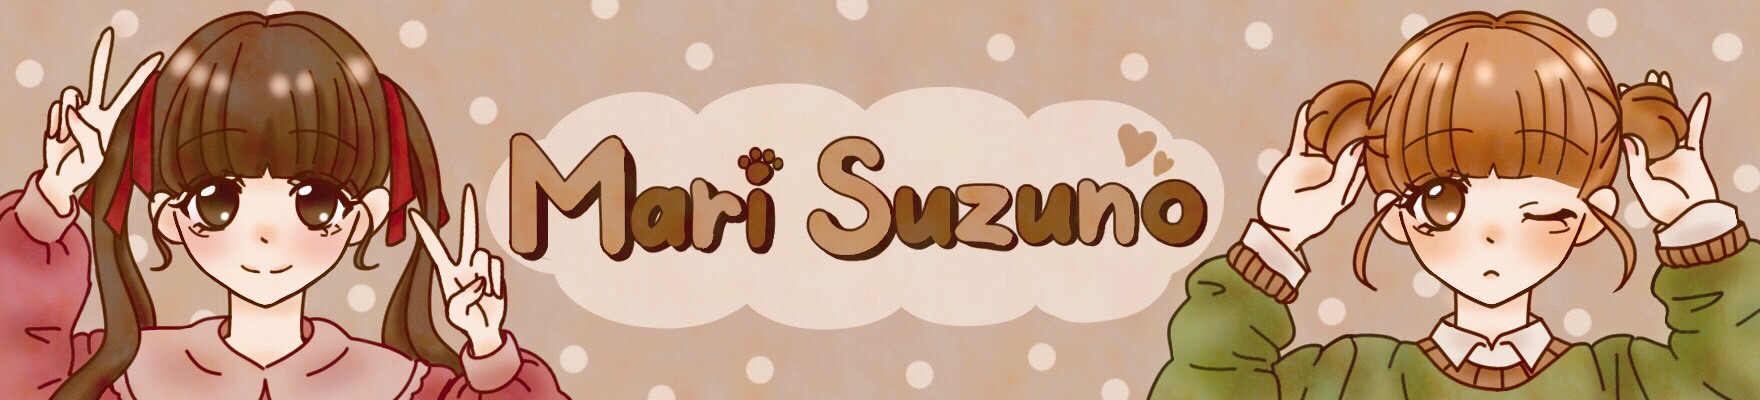 Mari_Suzuno banner